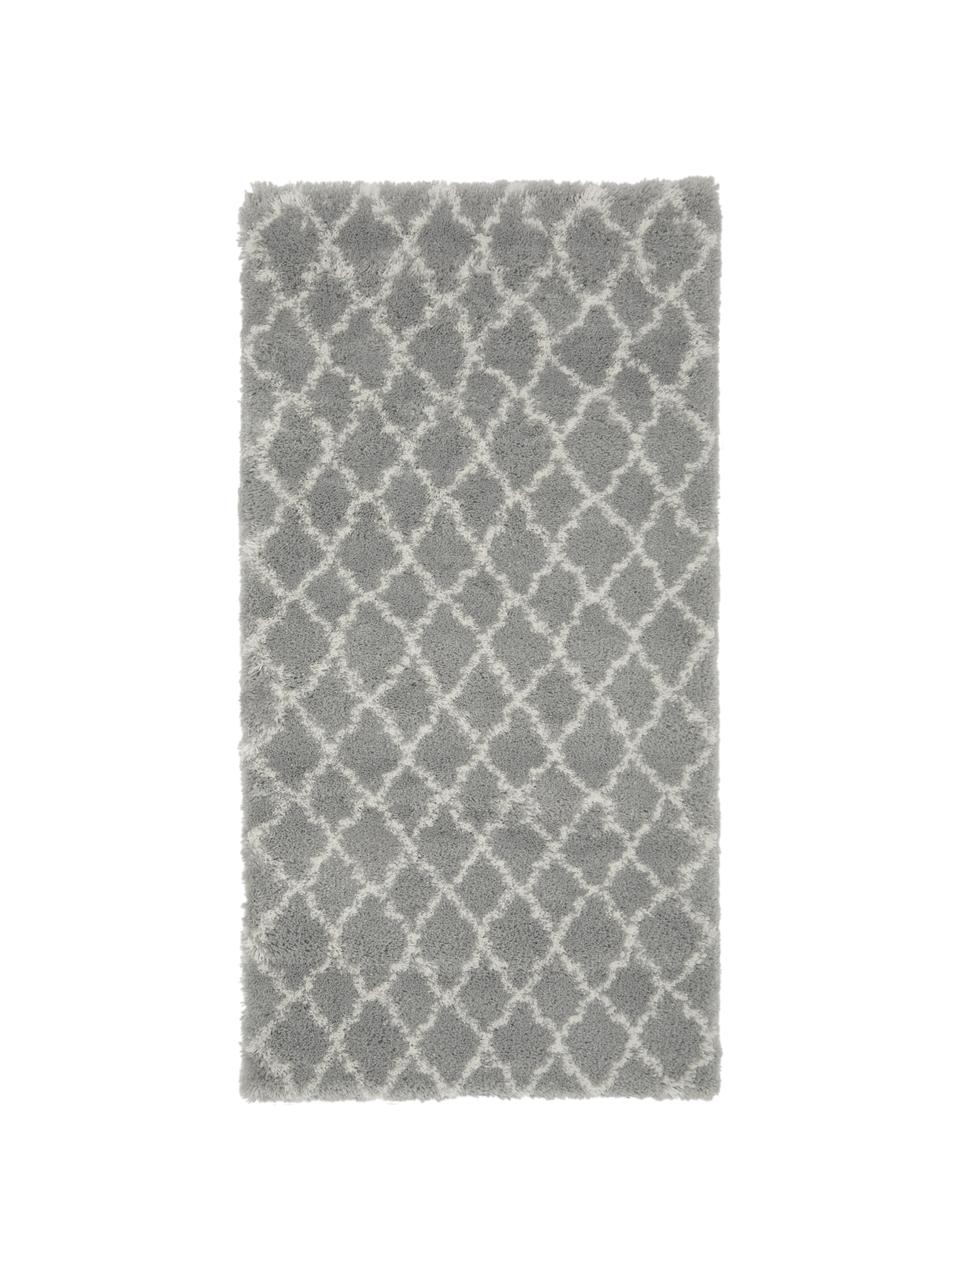 Hochflor-Teppich Mona in Grau/Creme, Flor: 100% Polypropylen, Grau, Cremeweiß, B 300 x L 400 cm (Größe XL)